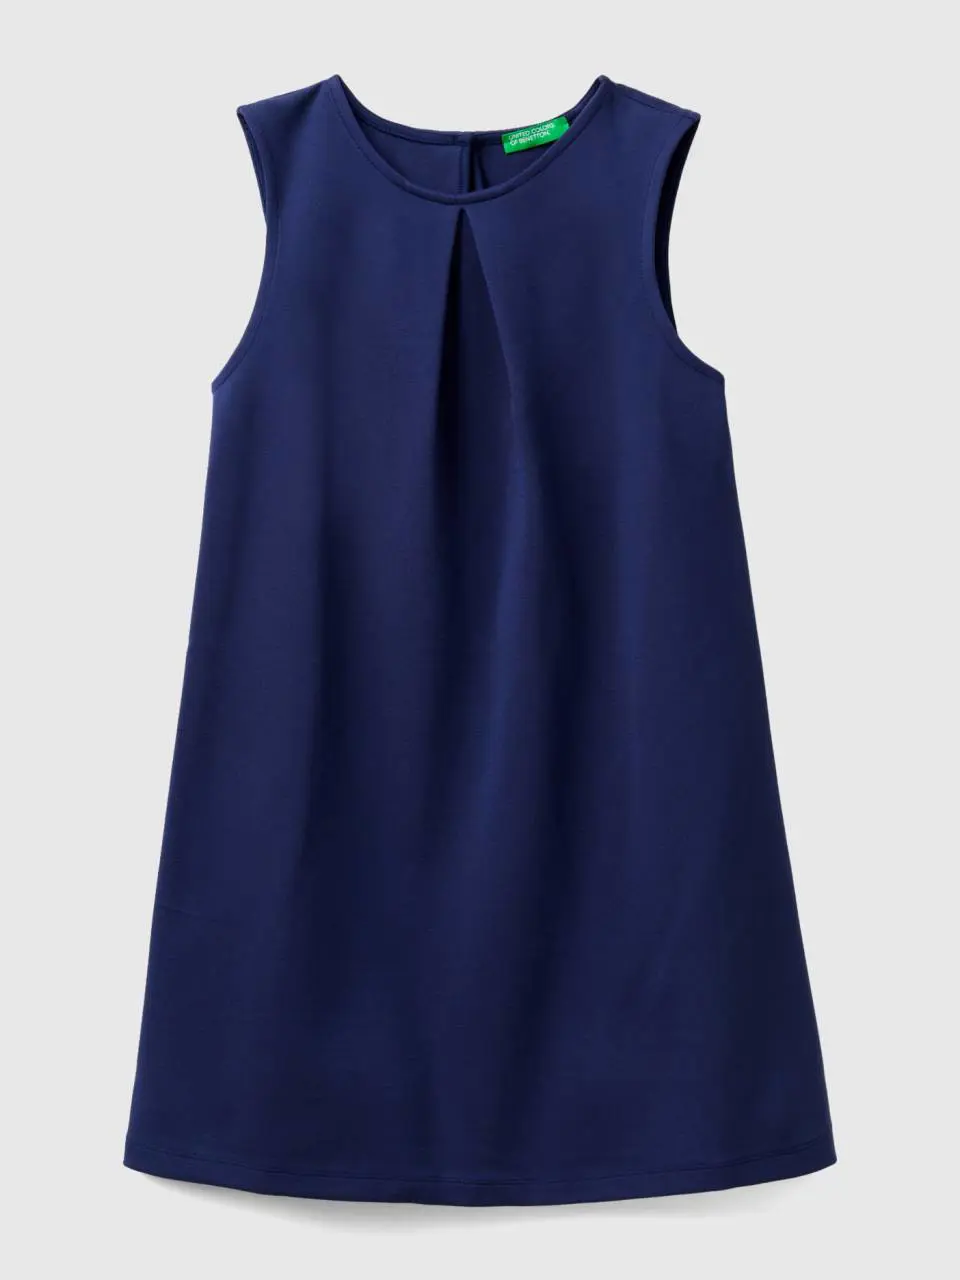 Benetton sleeveless dress. 1